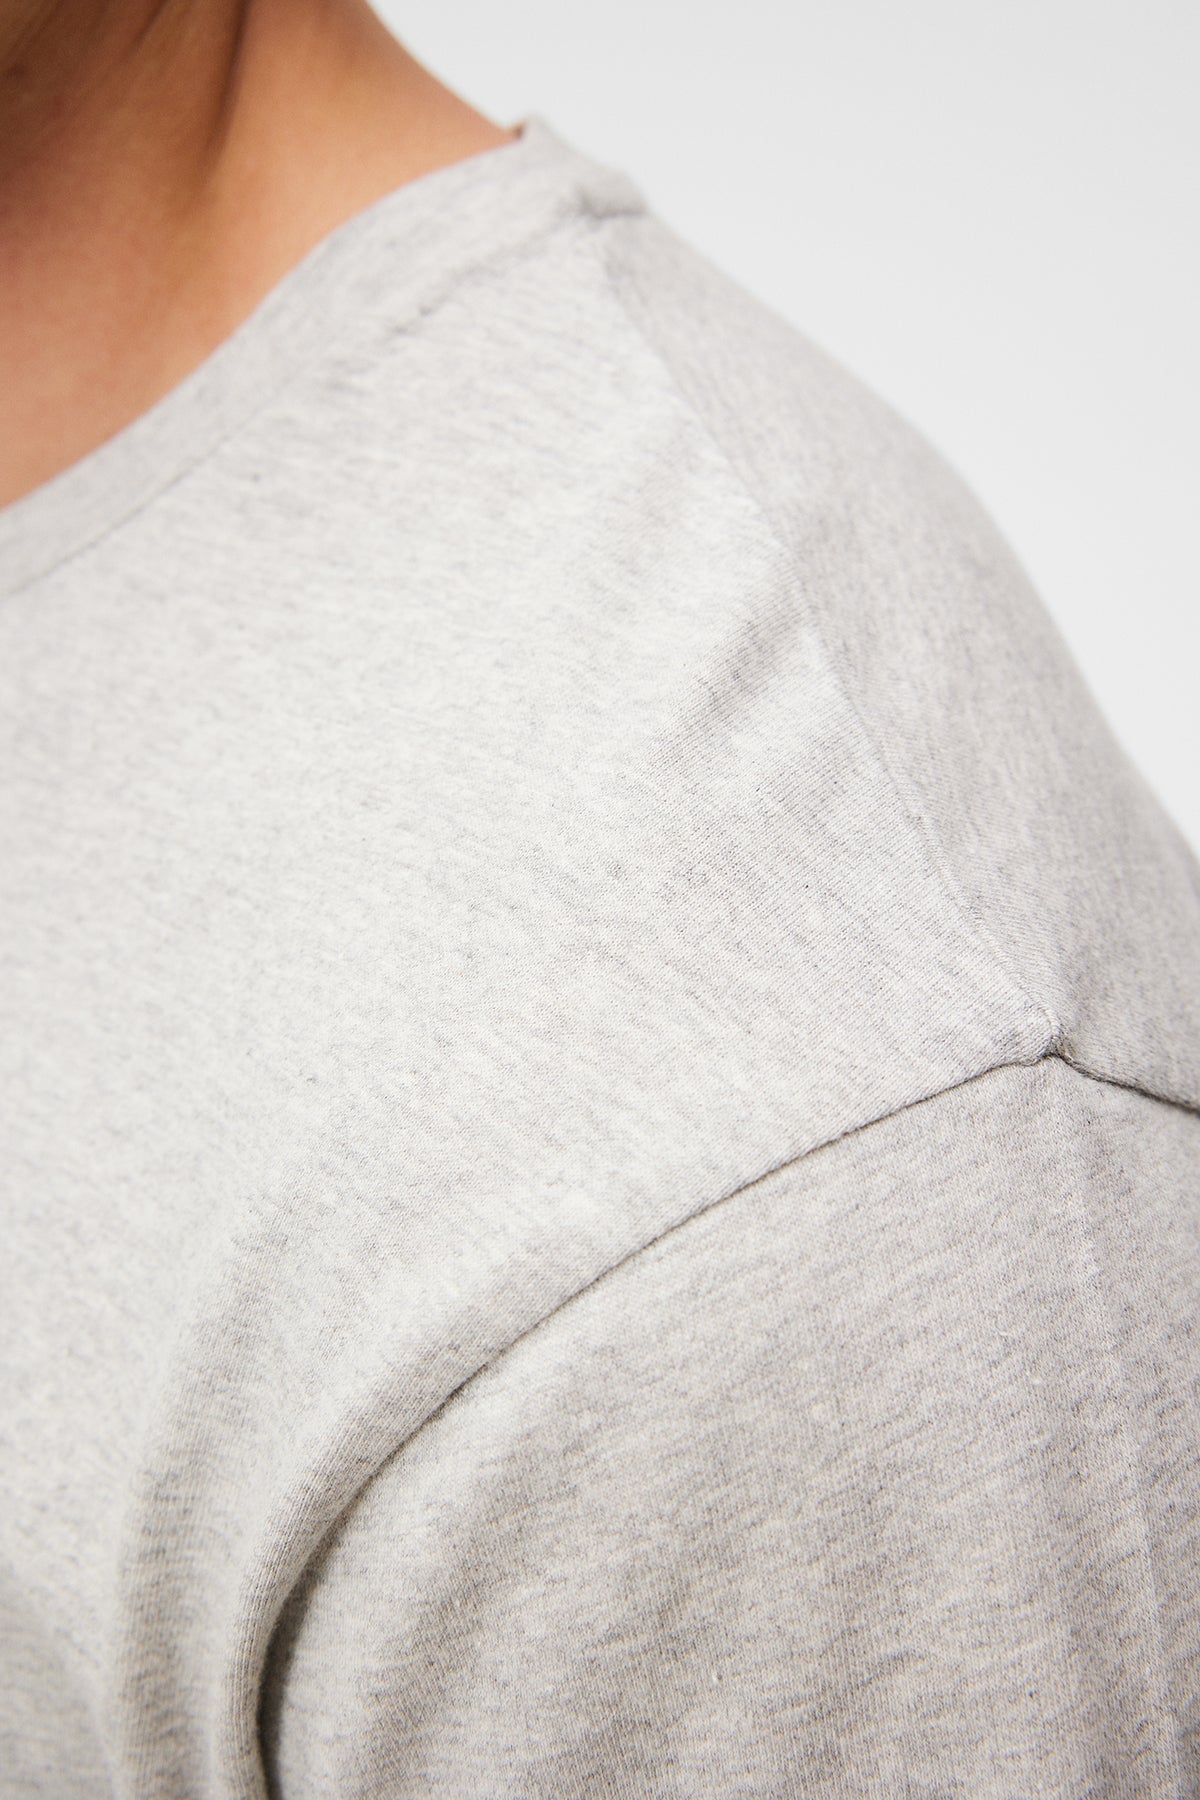 Sid Basic T-Shirt / Light Grey Melange